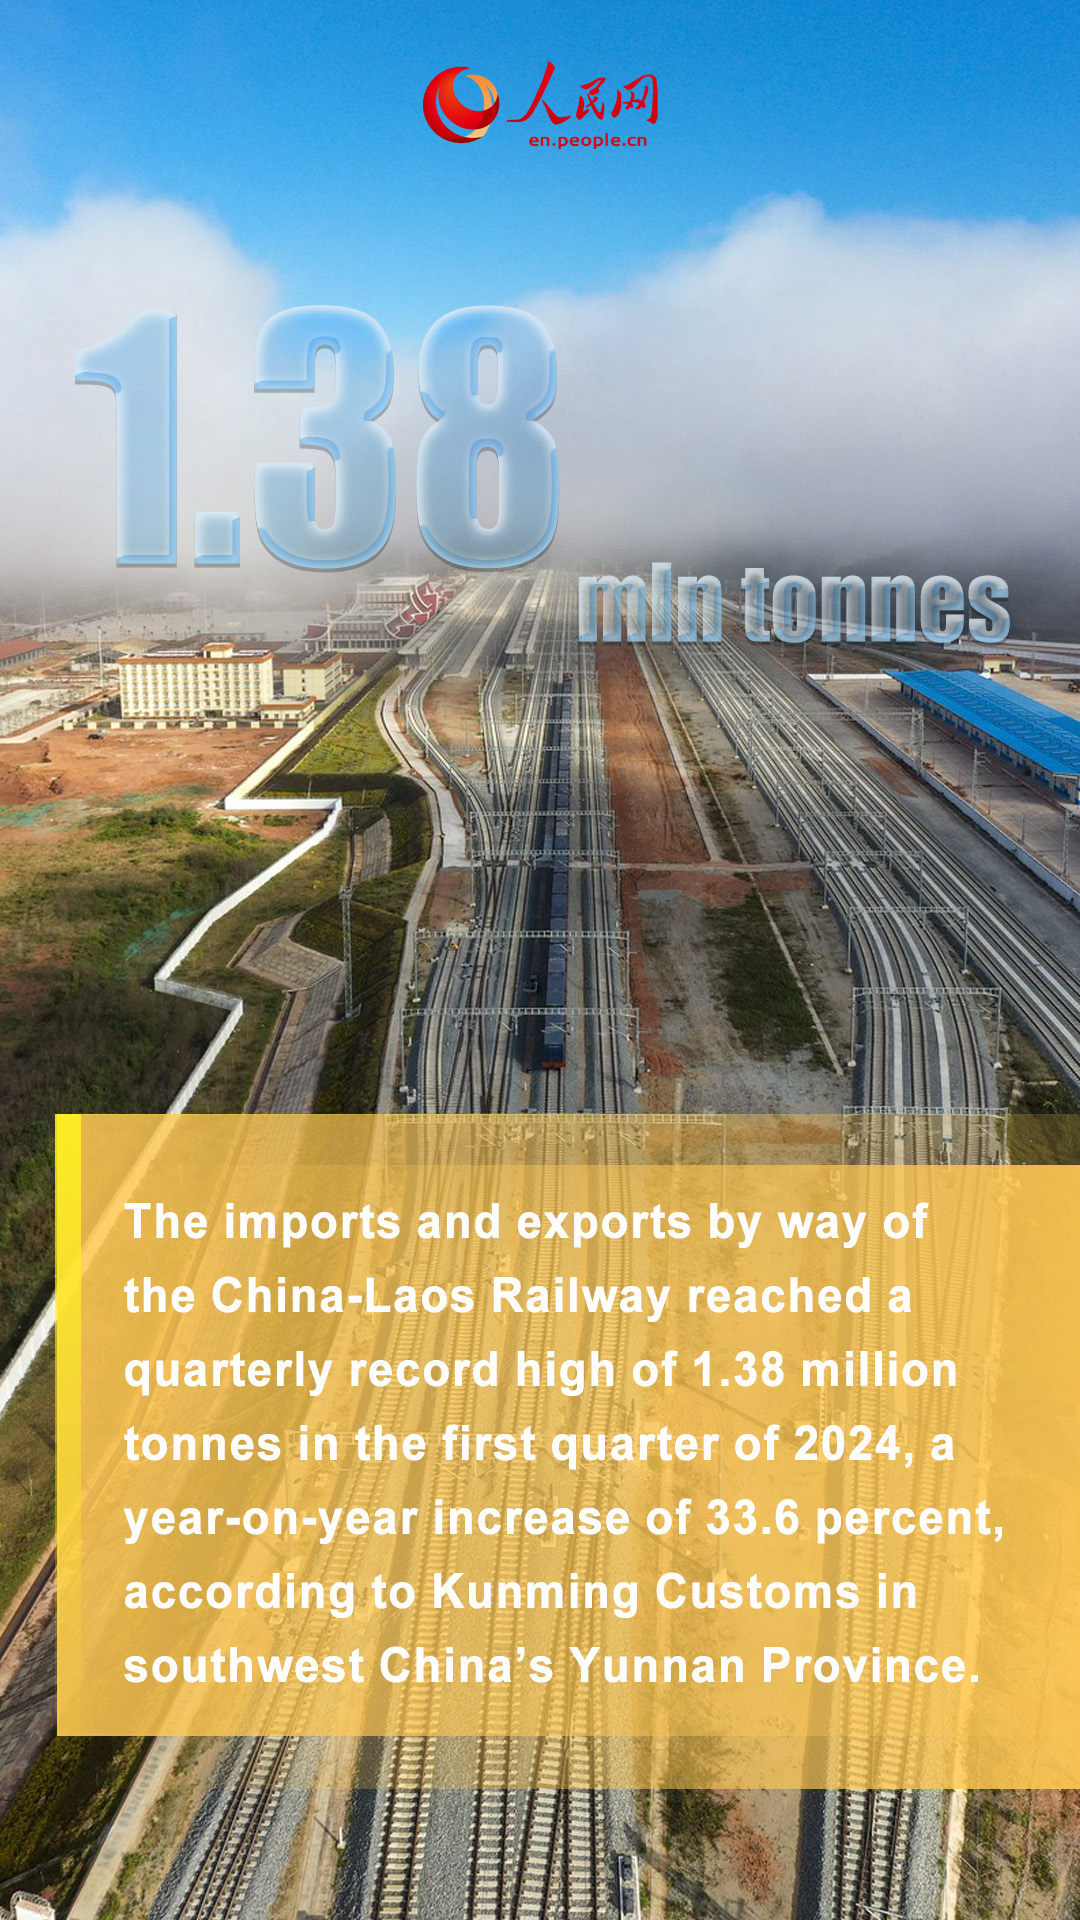 Cargo transport volume via China-Laos Railway logs new high in Q1